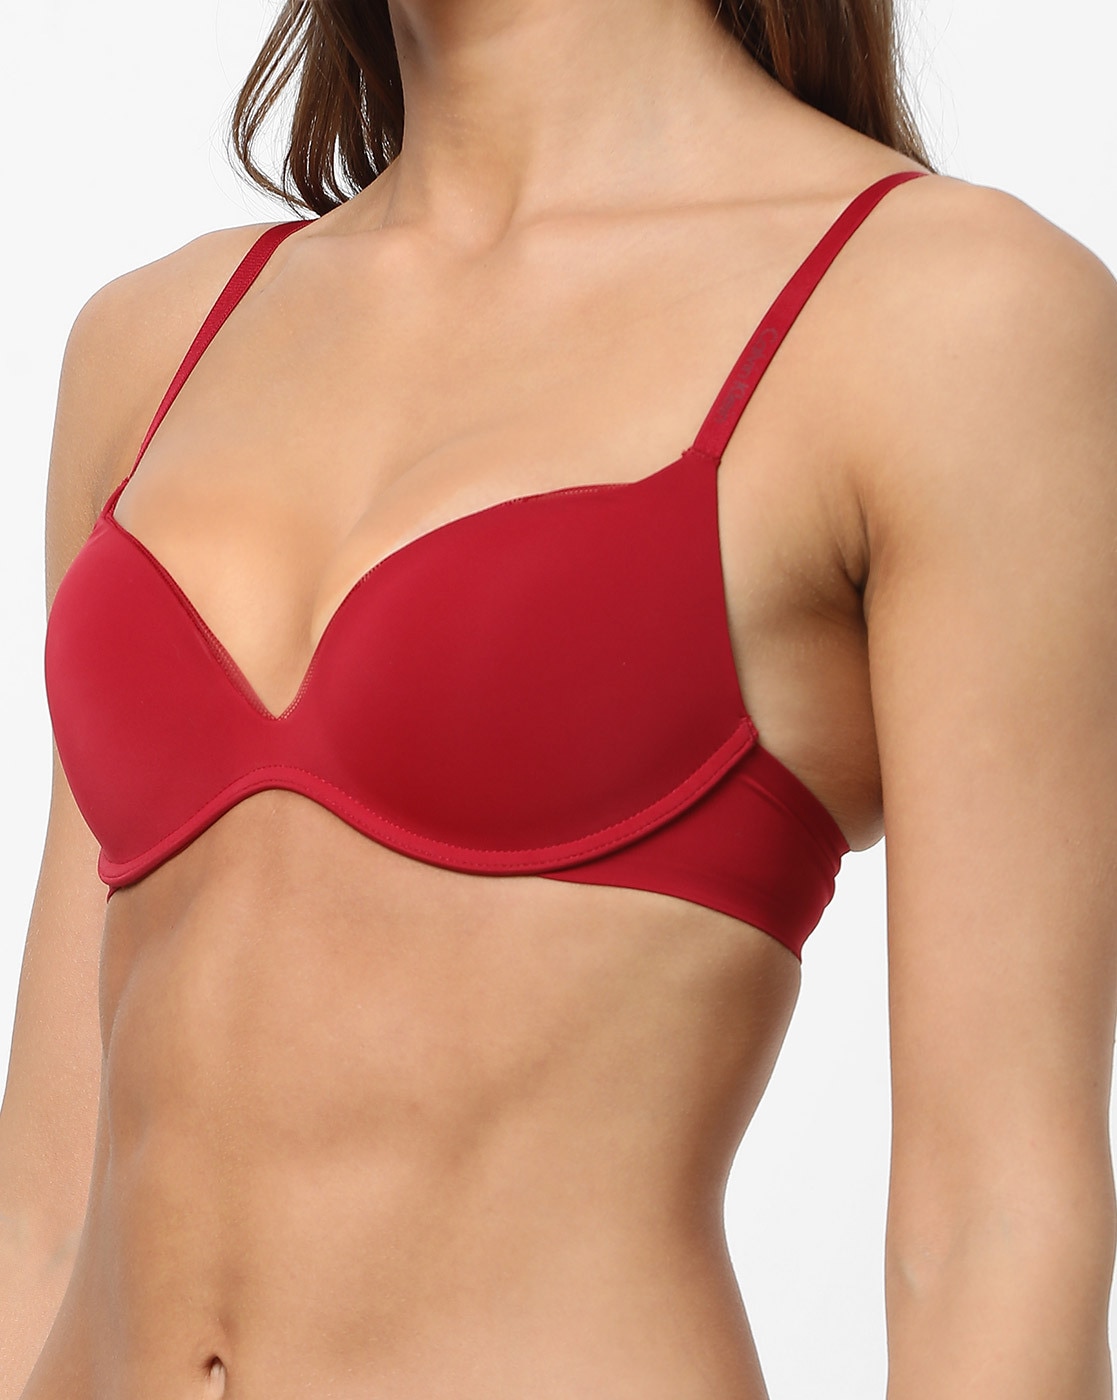 nsendm Female Underwear Adult Large Bras for Women Underwire Bra Push Up T  Shirt Bra Modern Demi Bra Lightly Padded Bra with Convertible Work(Red, XL)  